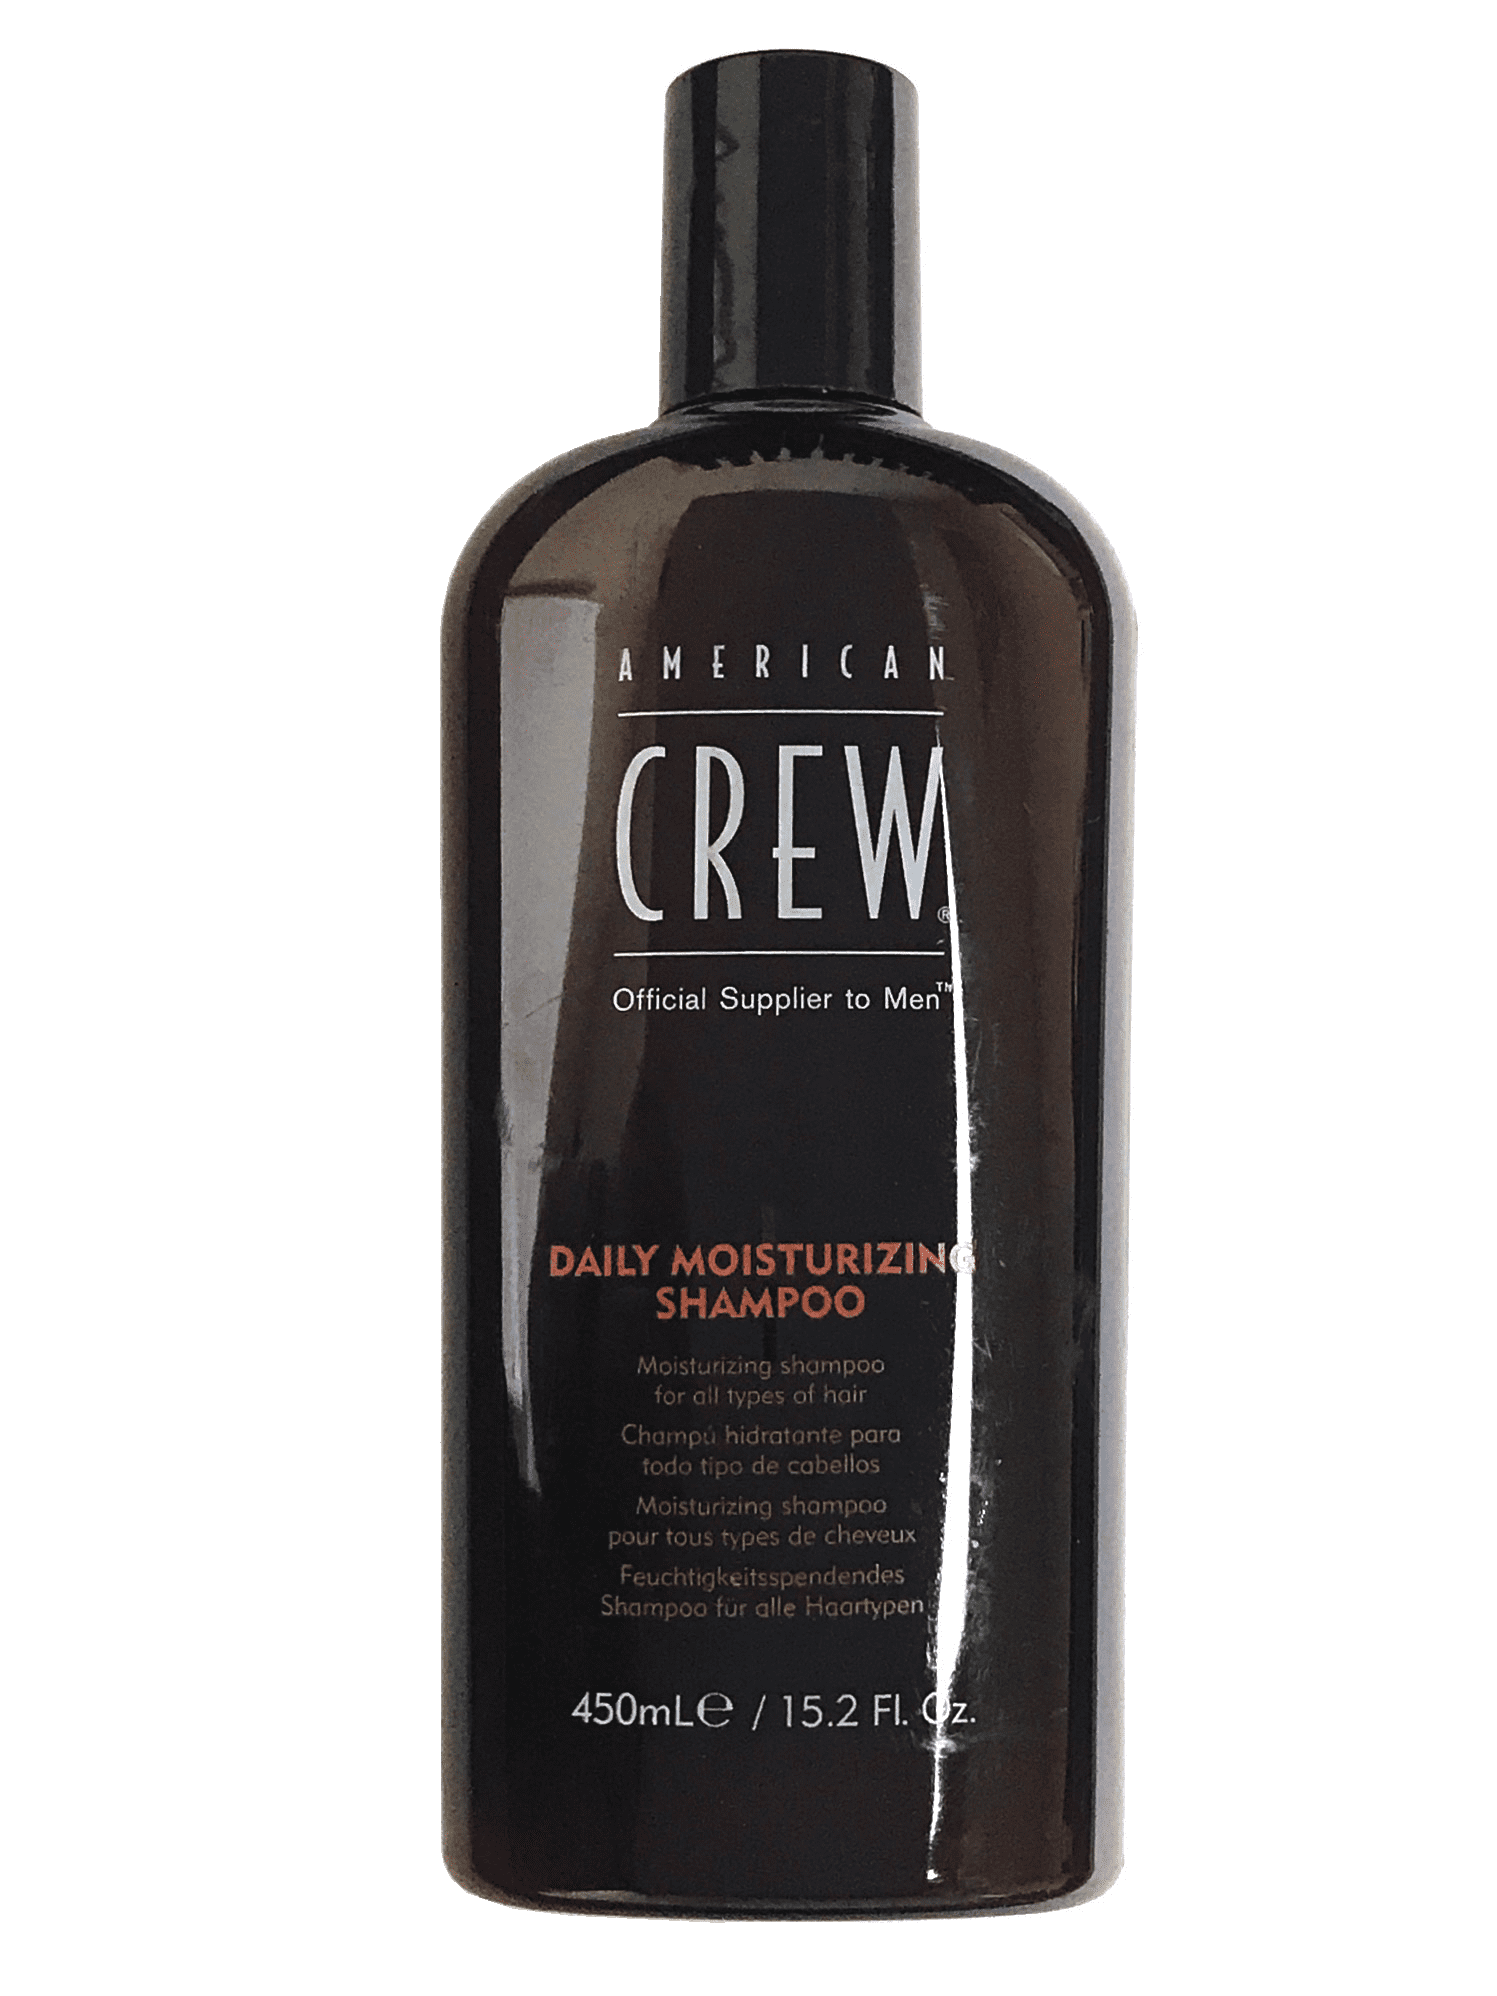 American Crew Classic Daily Silver Shampoo 250ml. Расческа American Crew. American Crew Daily Silver Shampoo. American Crew Official Supplier to men.